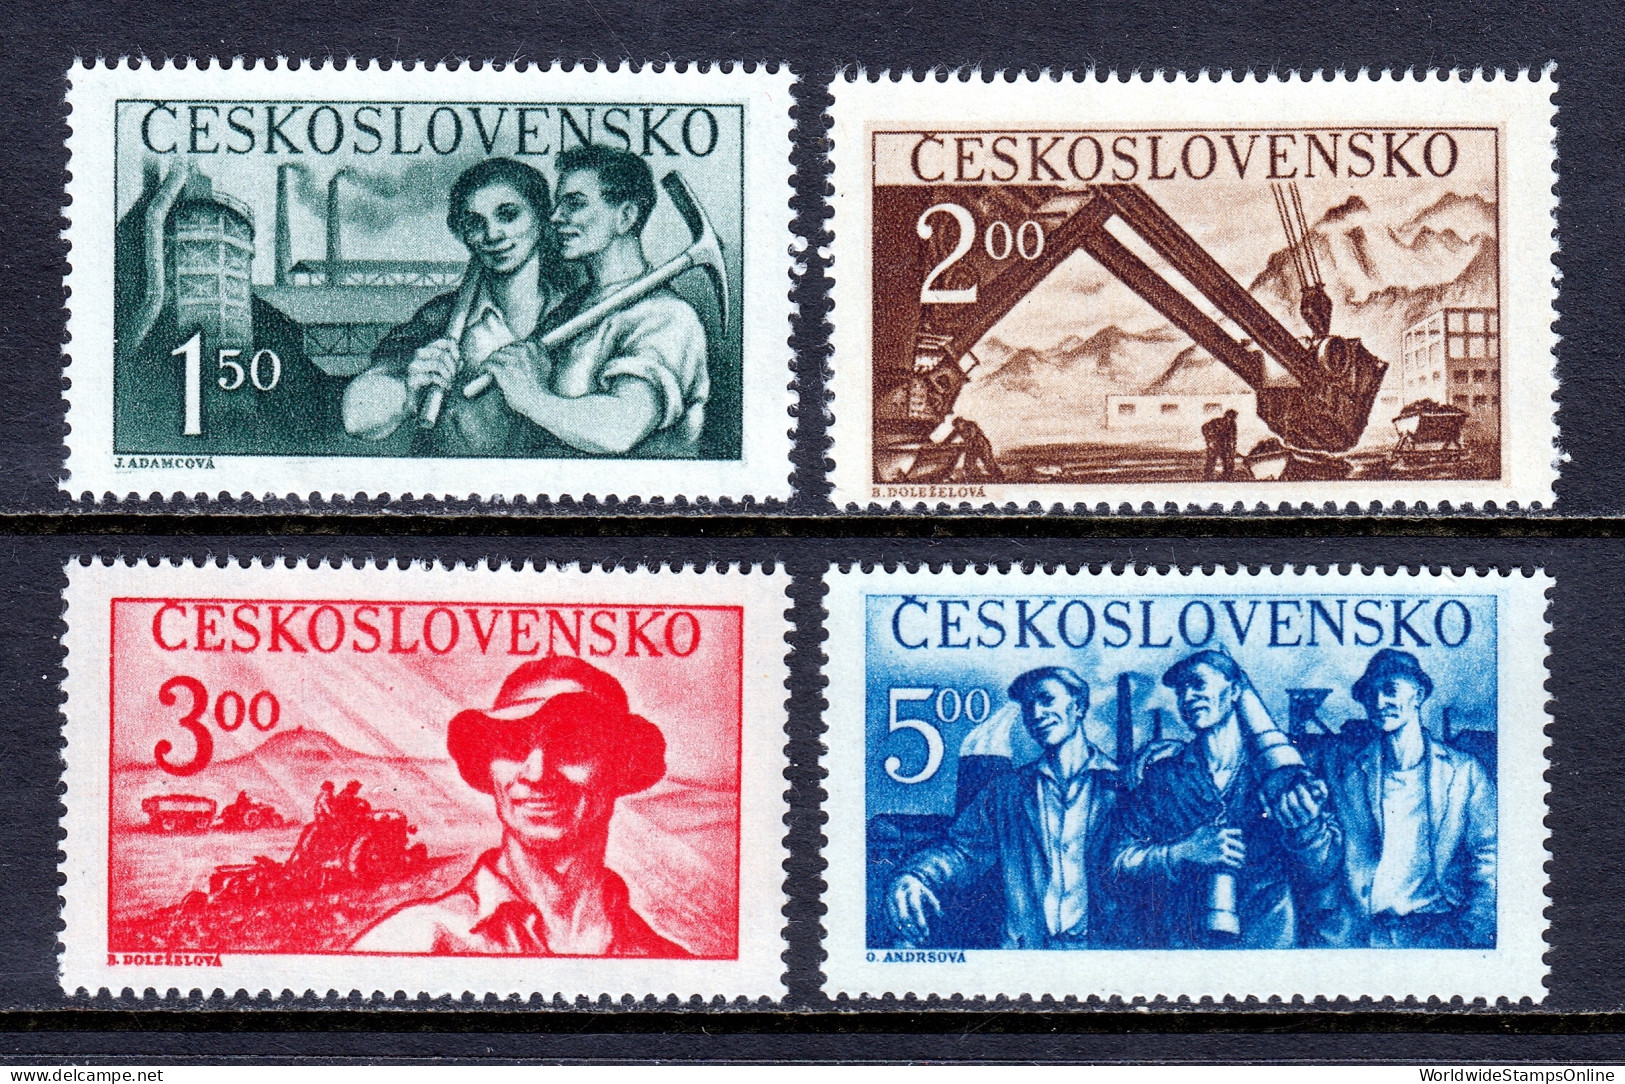 Czechoslovakia - Scott #410-413 - MNH - Gum Bumps #412 - SCV $6.50 - Unused Stamps